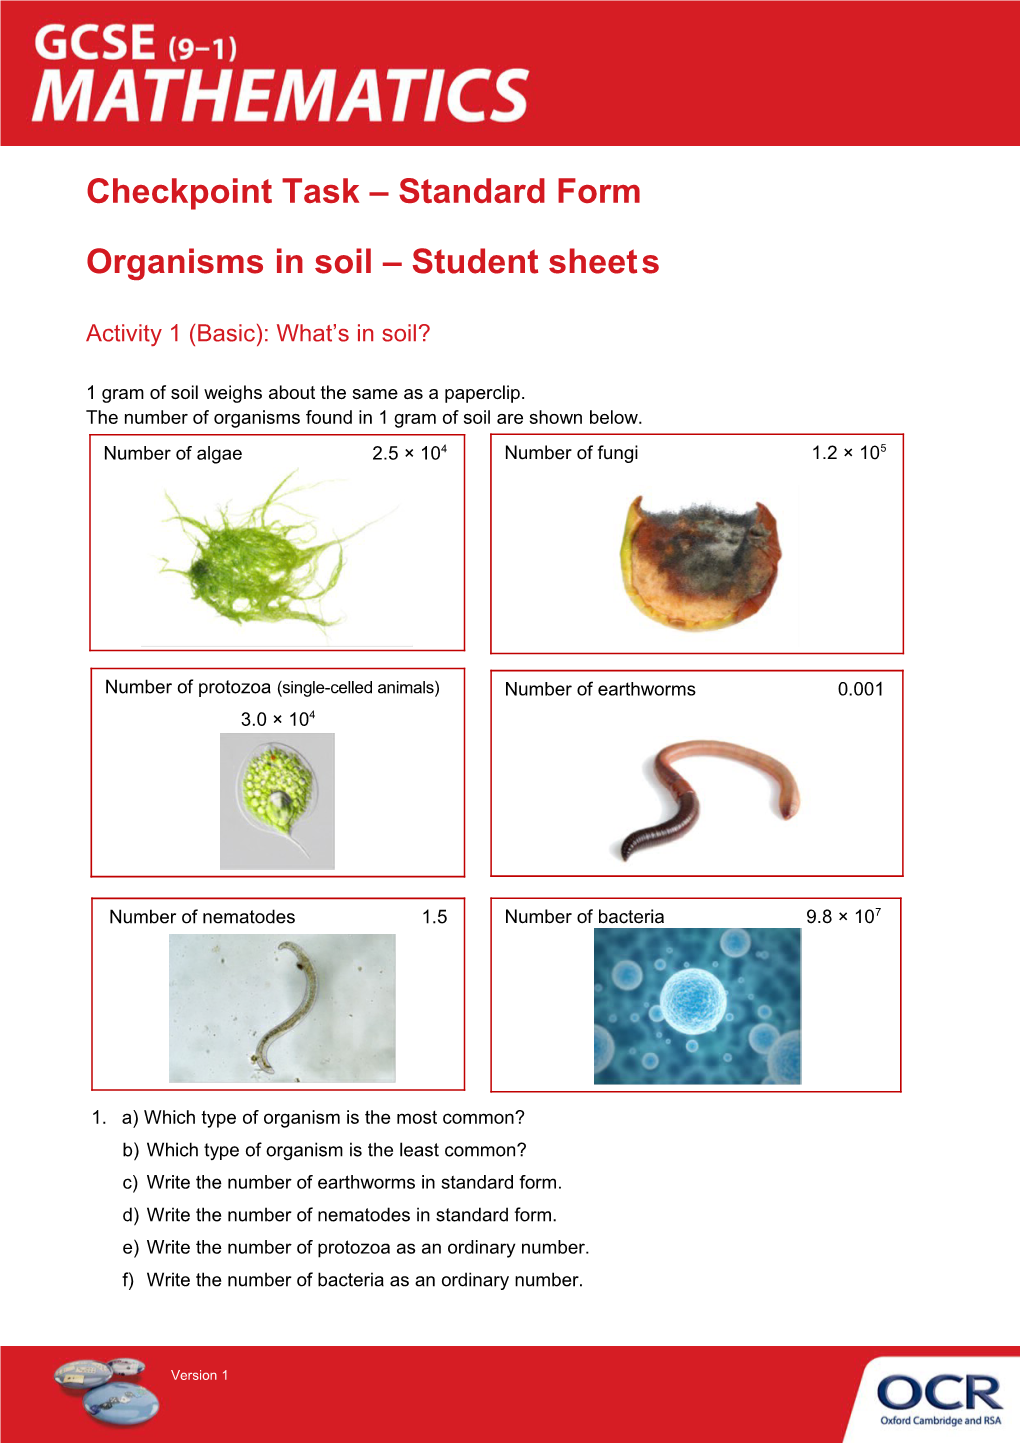 GCSE (9-1) Mathematics, Organisms in Soil